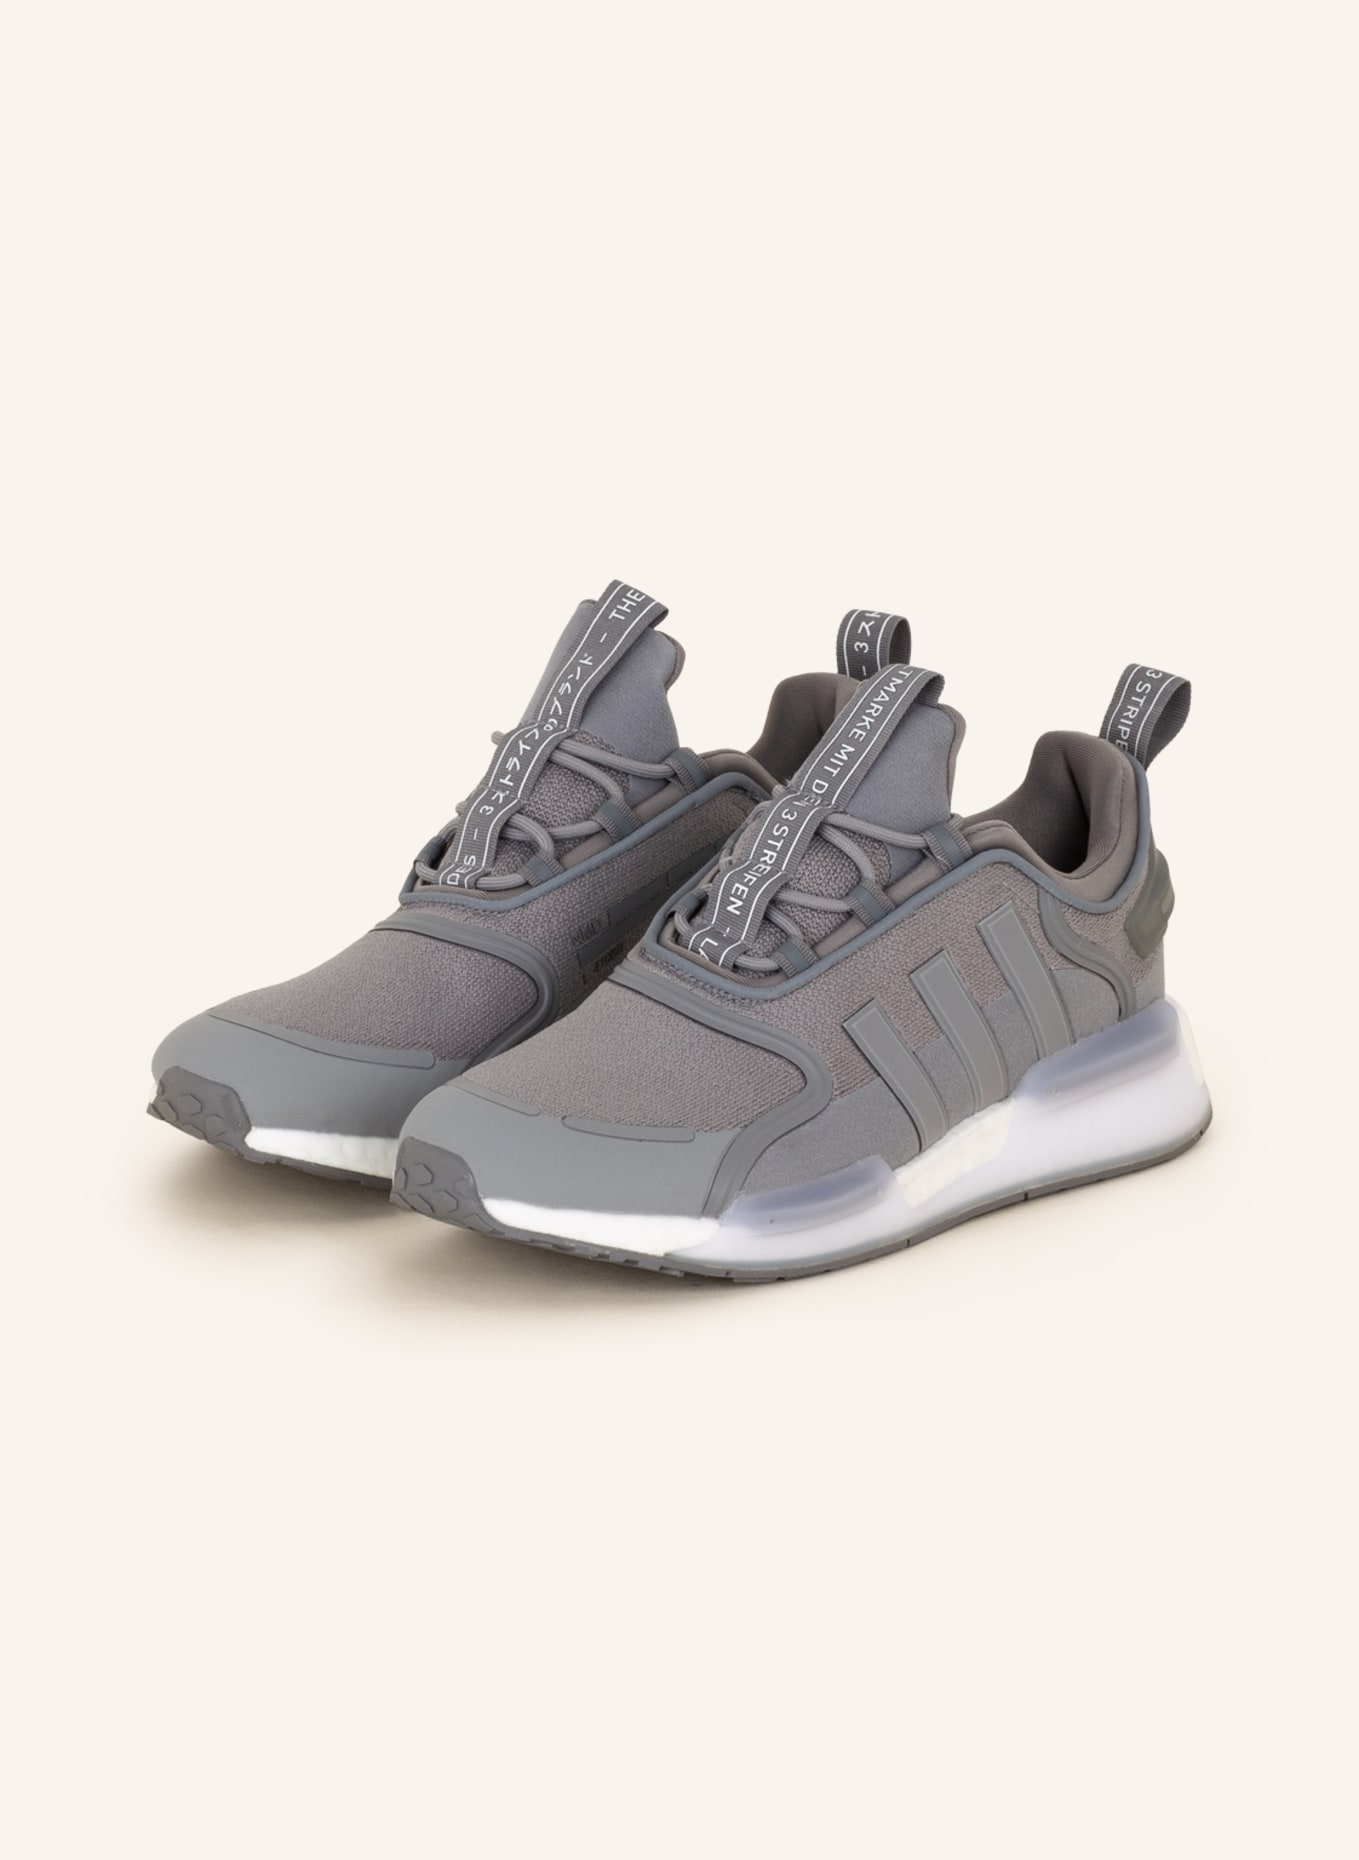 adidas Originals Sneakers in gray NMD